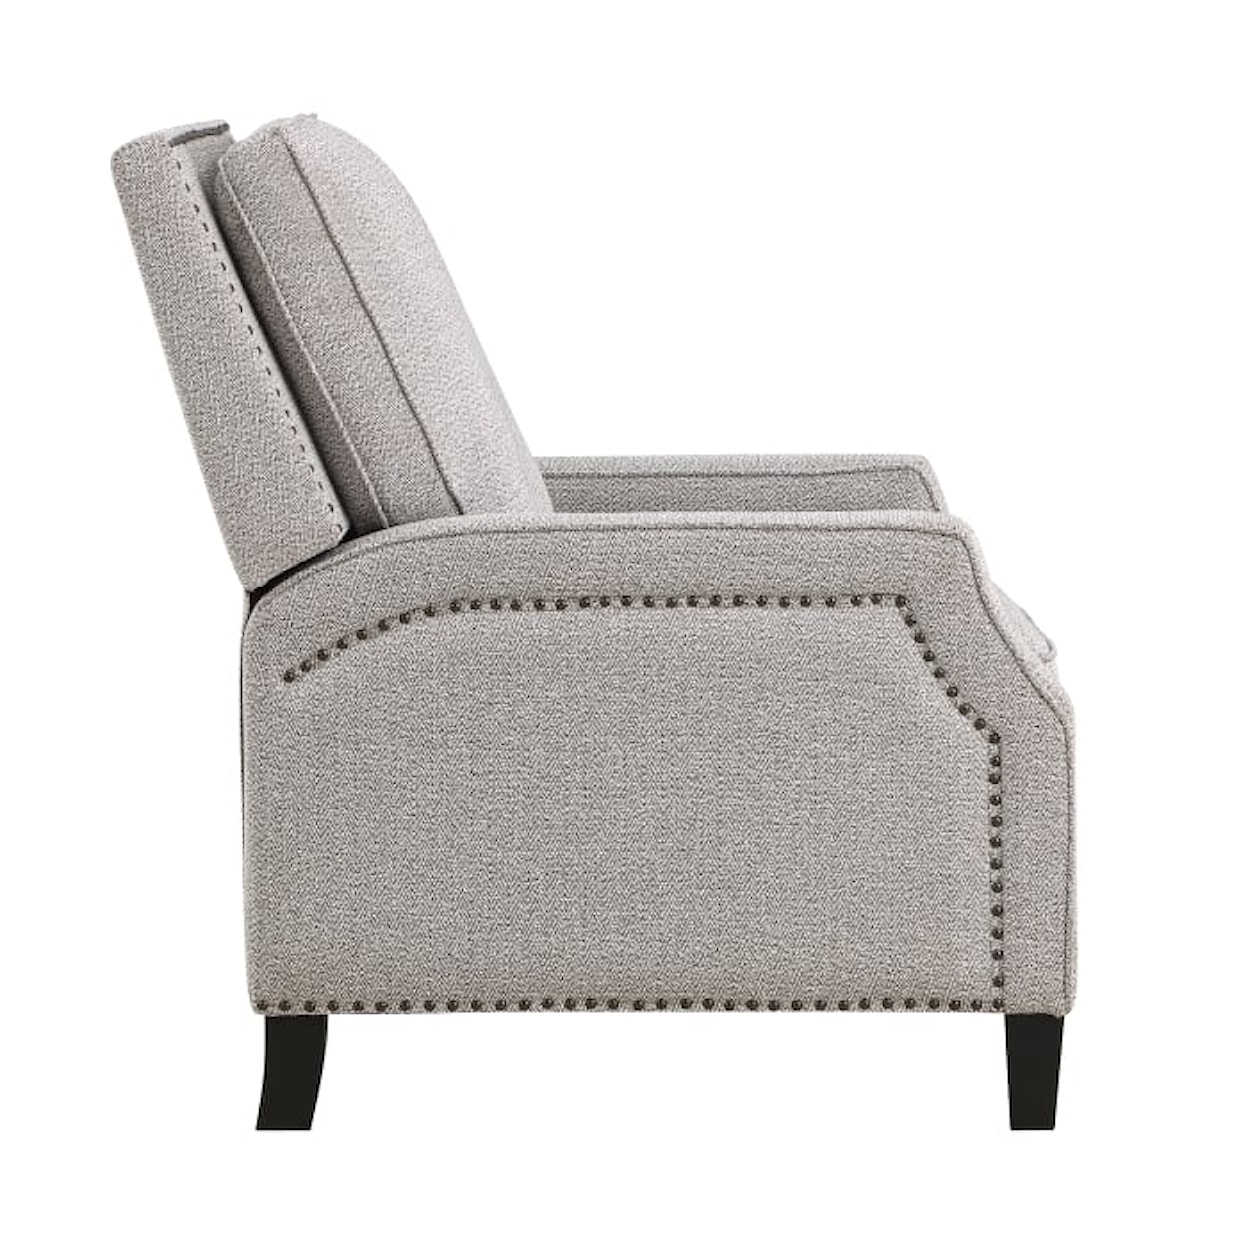 Homelegance Furniture Berenson Push Back Reclining Chair